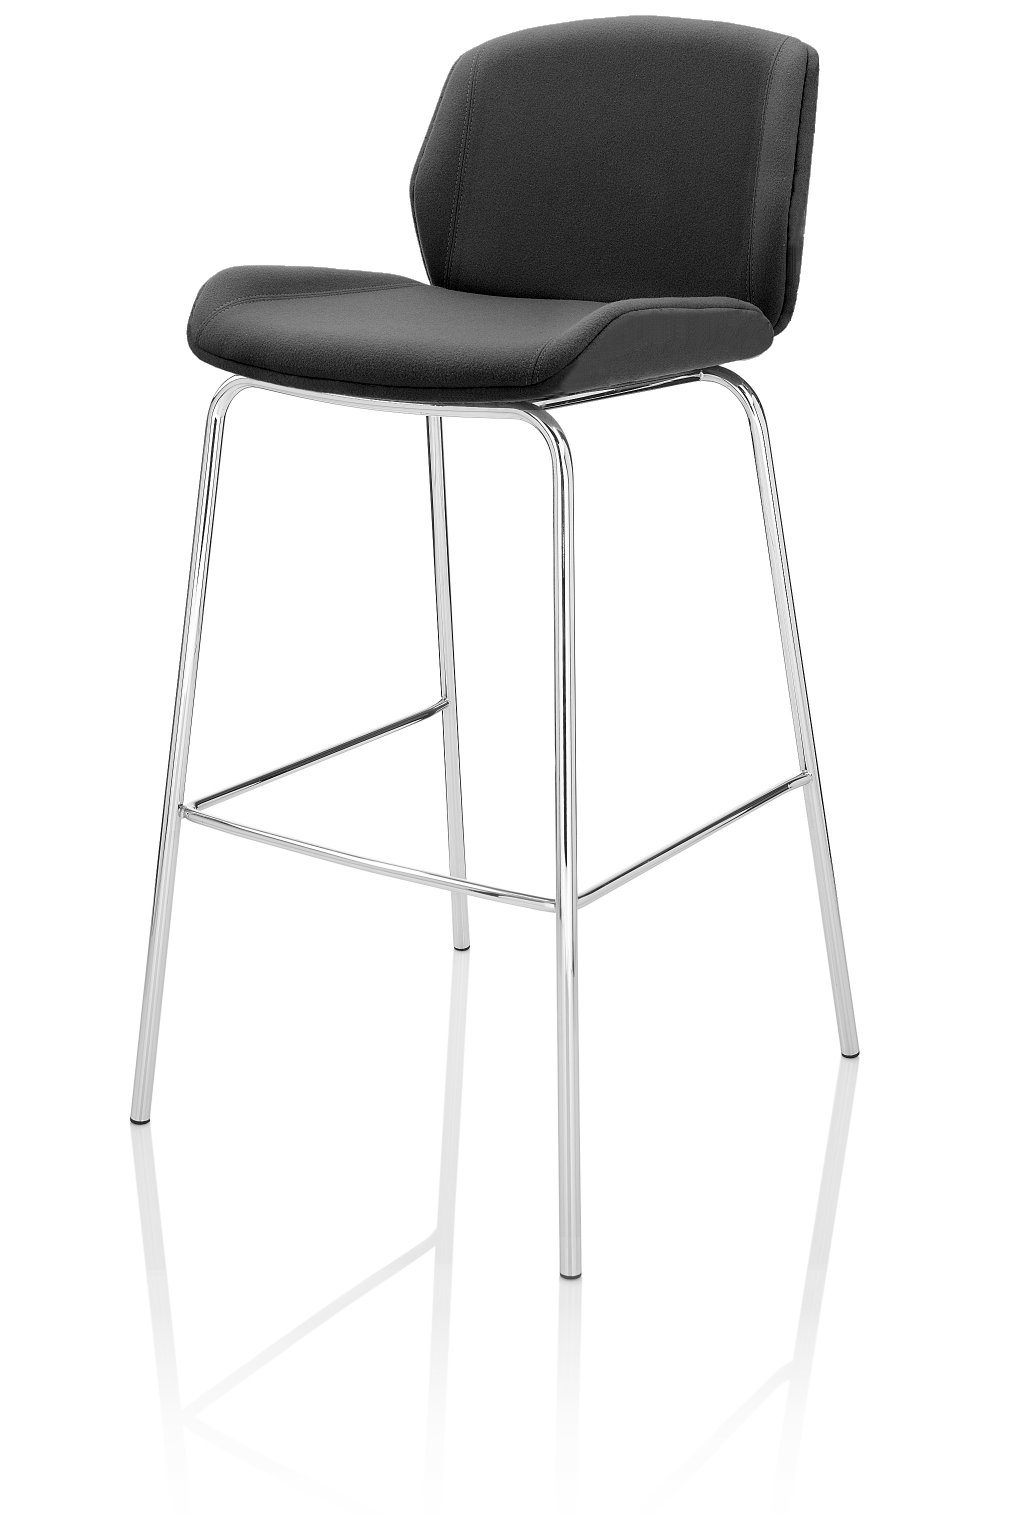 Kruze-high chair 3-4 front (dark grey).jpg